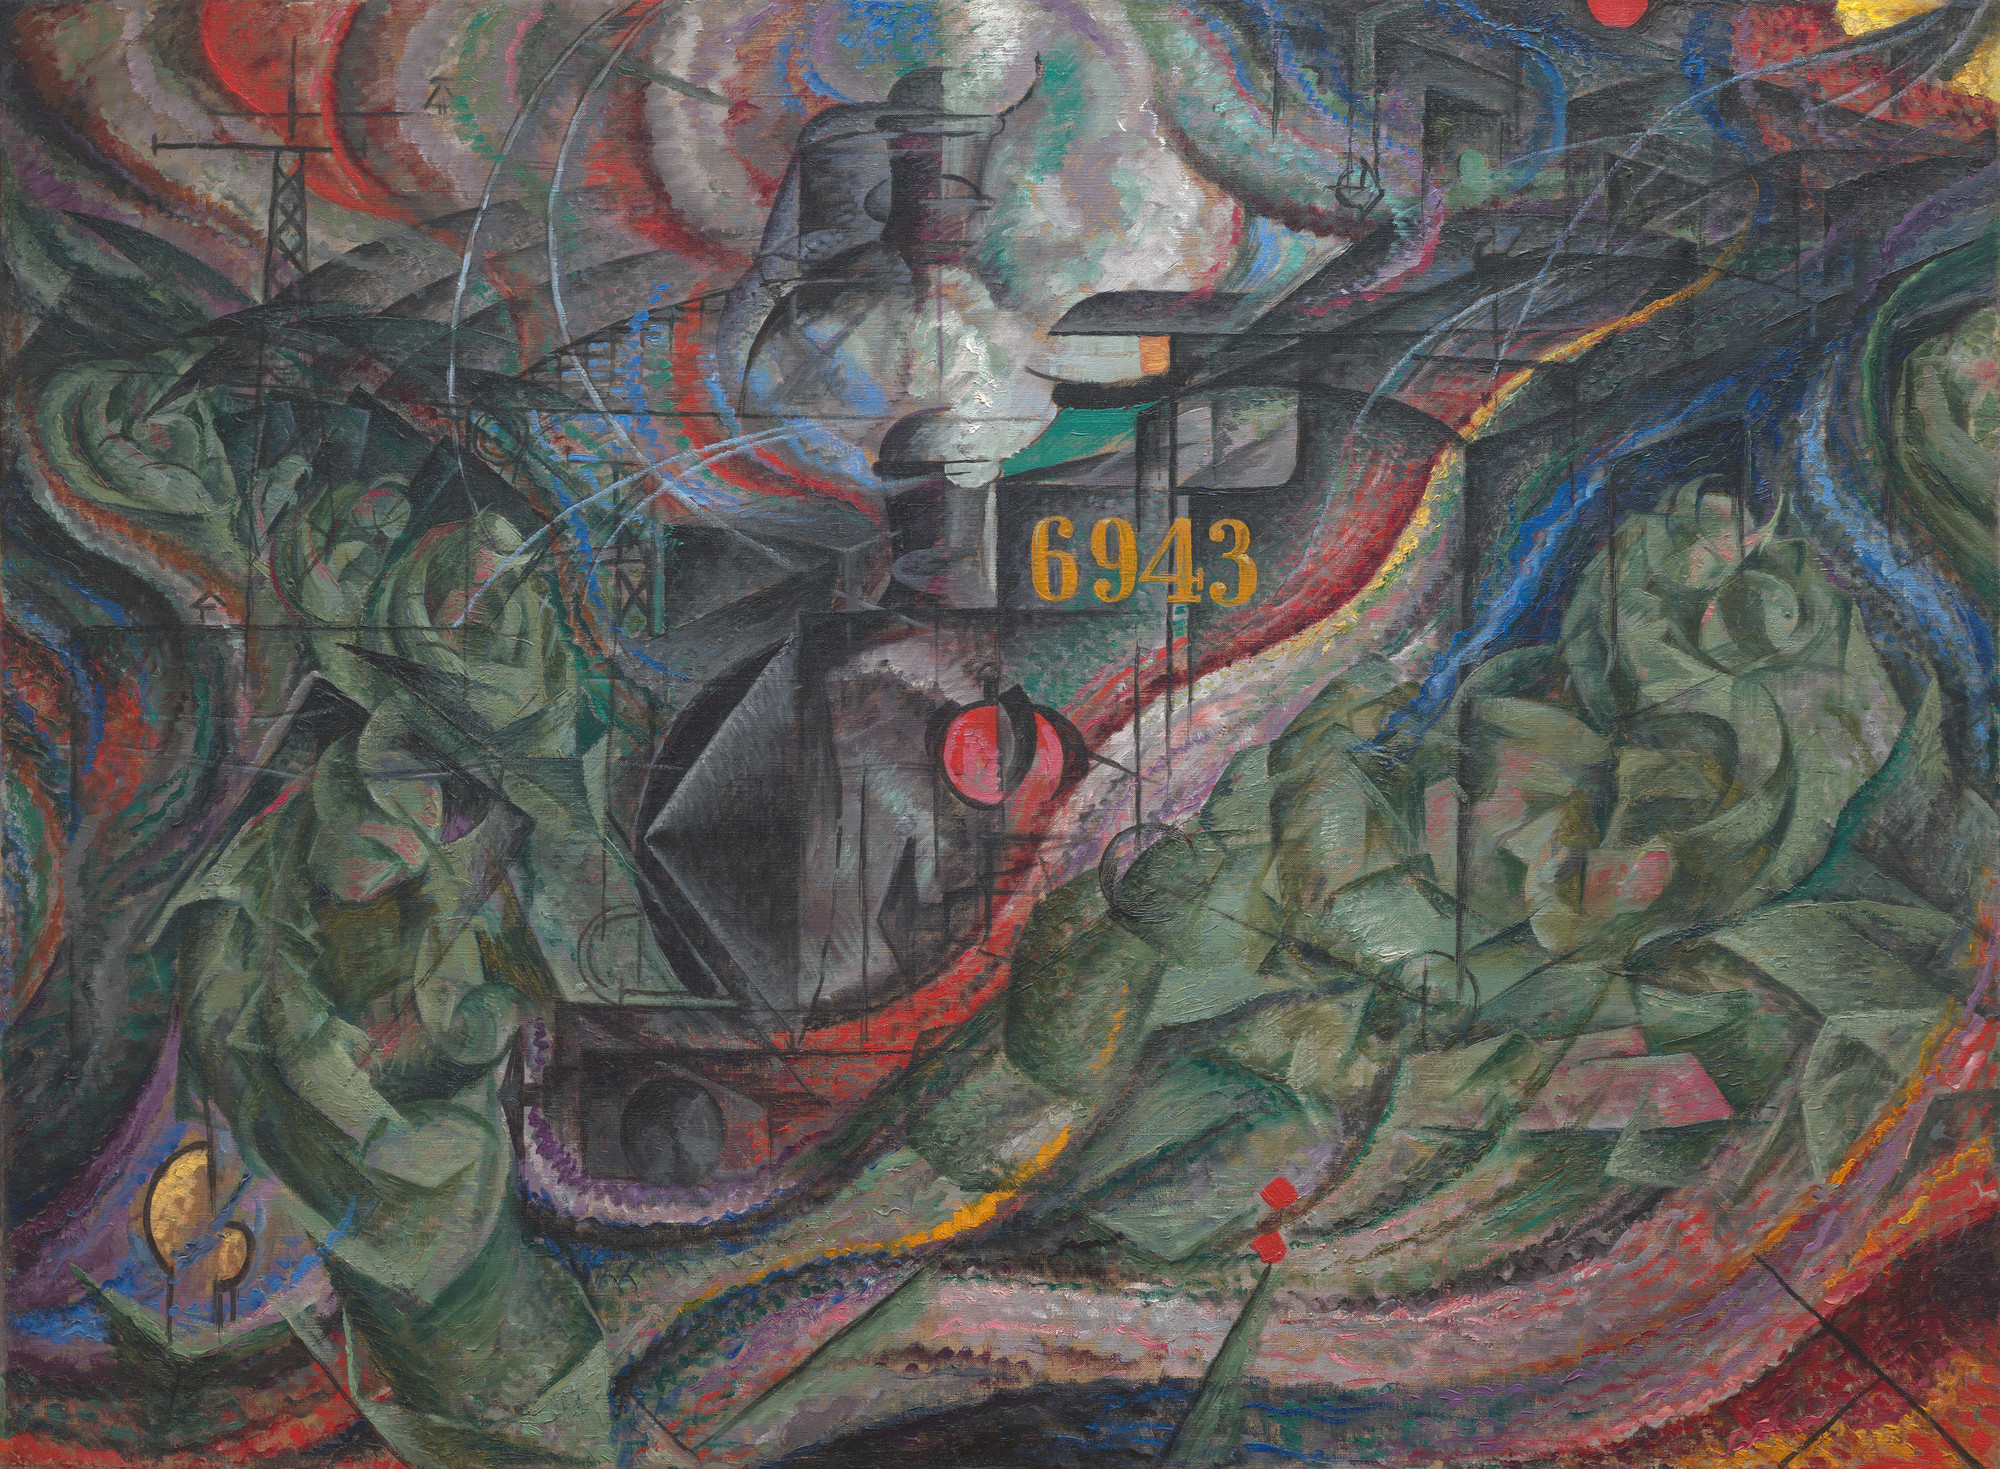 Umberto Boccioni, States of Mind: The Farewells, 1911, oil on canvas, 70.5 x 96.2 cm (MoMA)